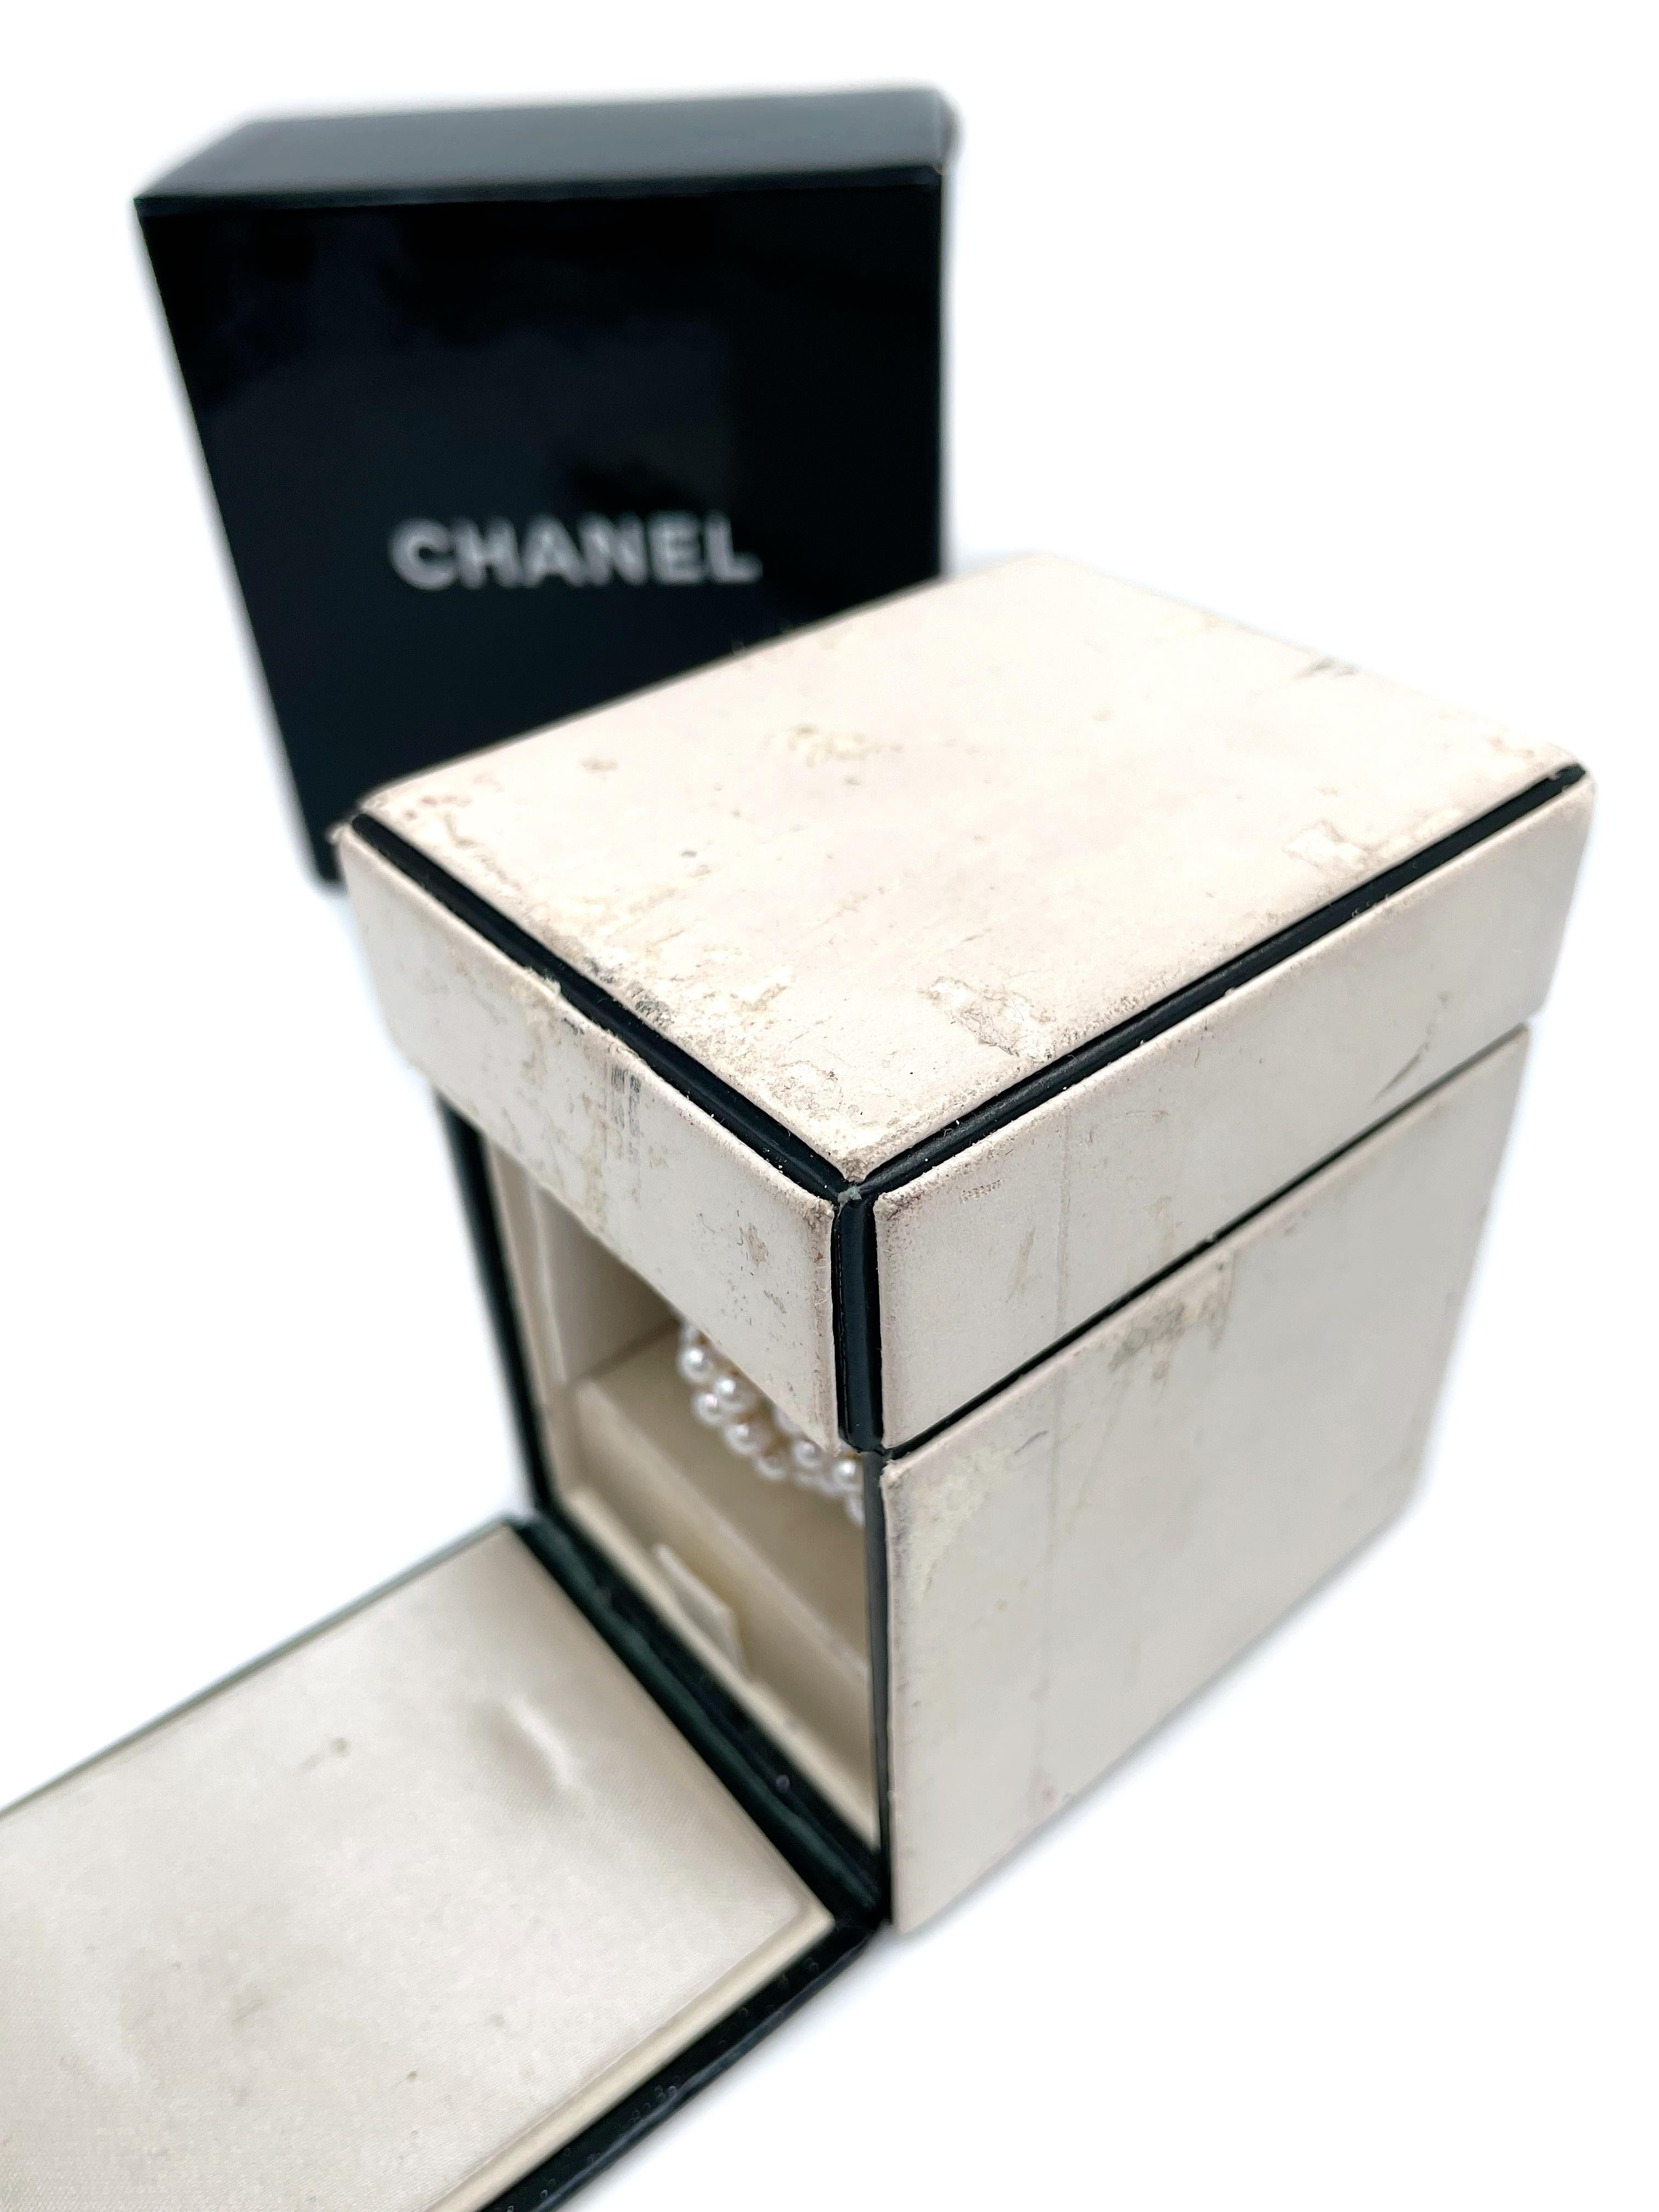 1989 Chanel Mademoiselle 18 Karat Gold Cultured Pearl Quartz Lady Wrist Watch 1